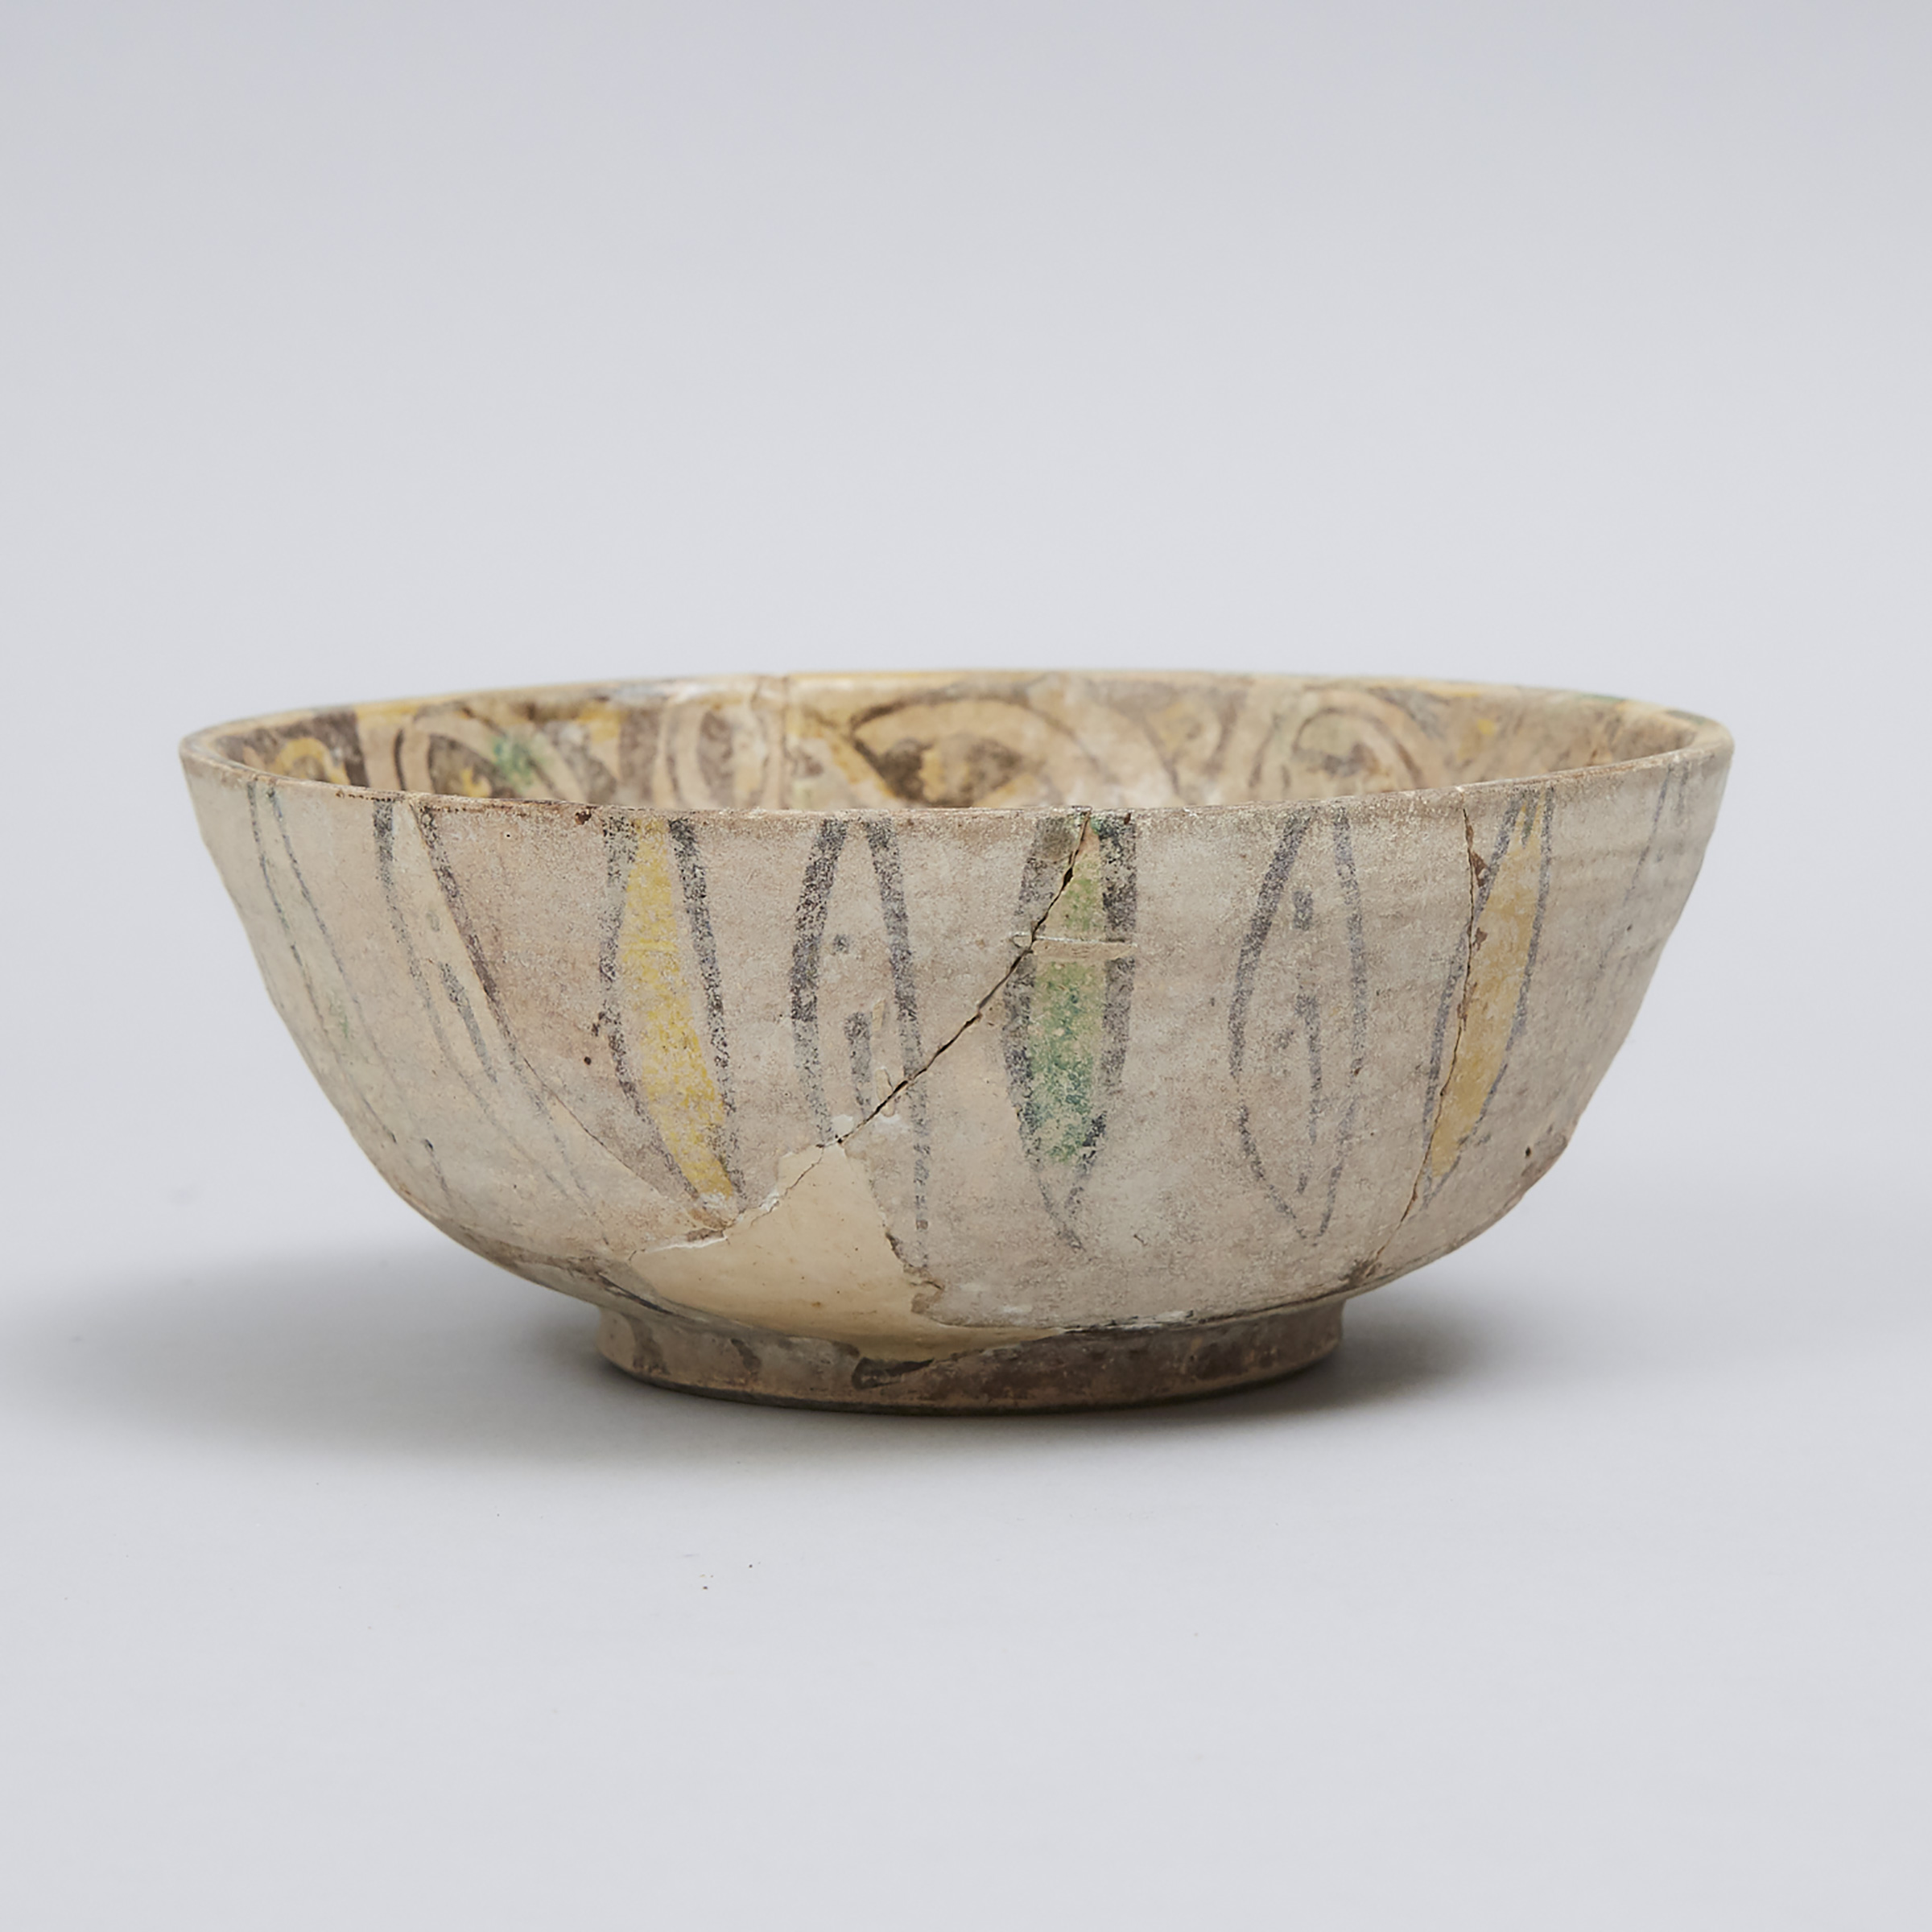 Nishapur Buffware Pottery Bowl, Persia, 11th/12th century